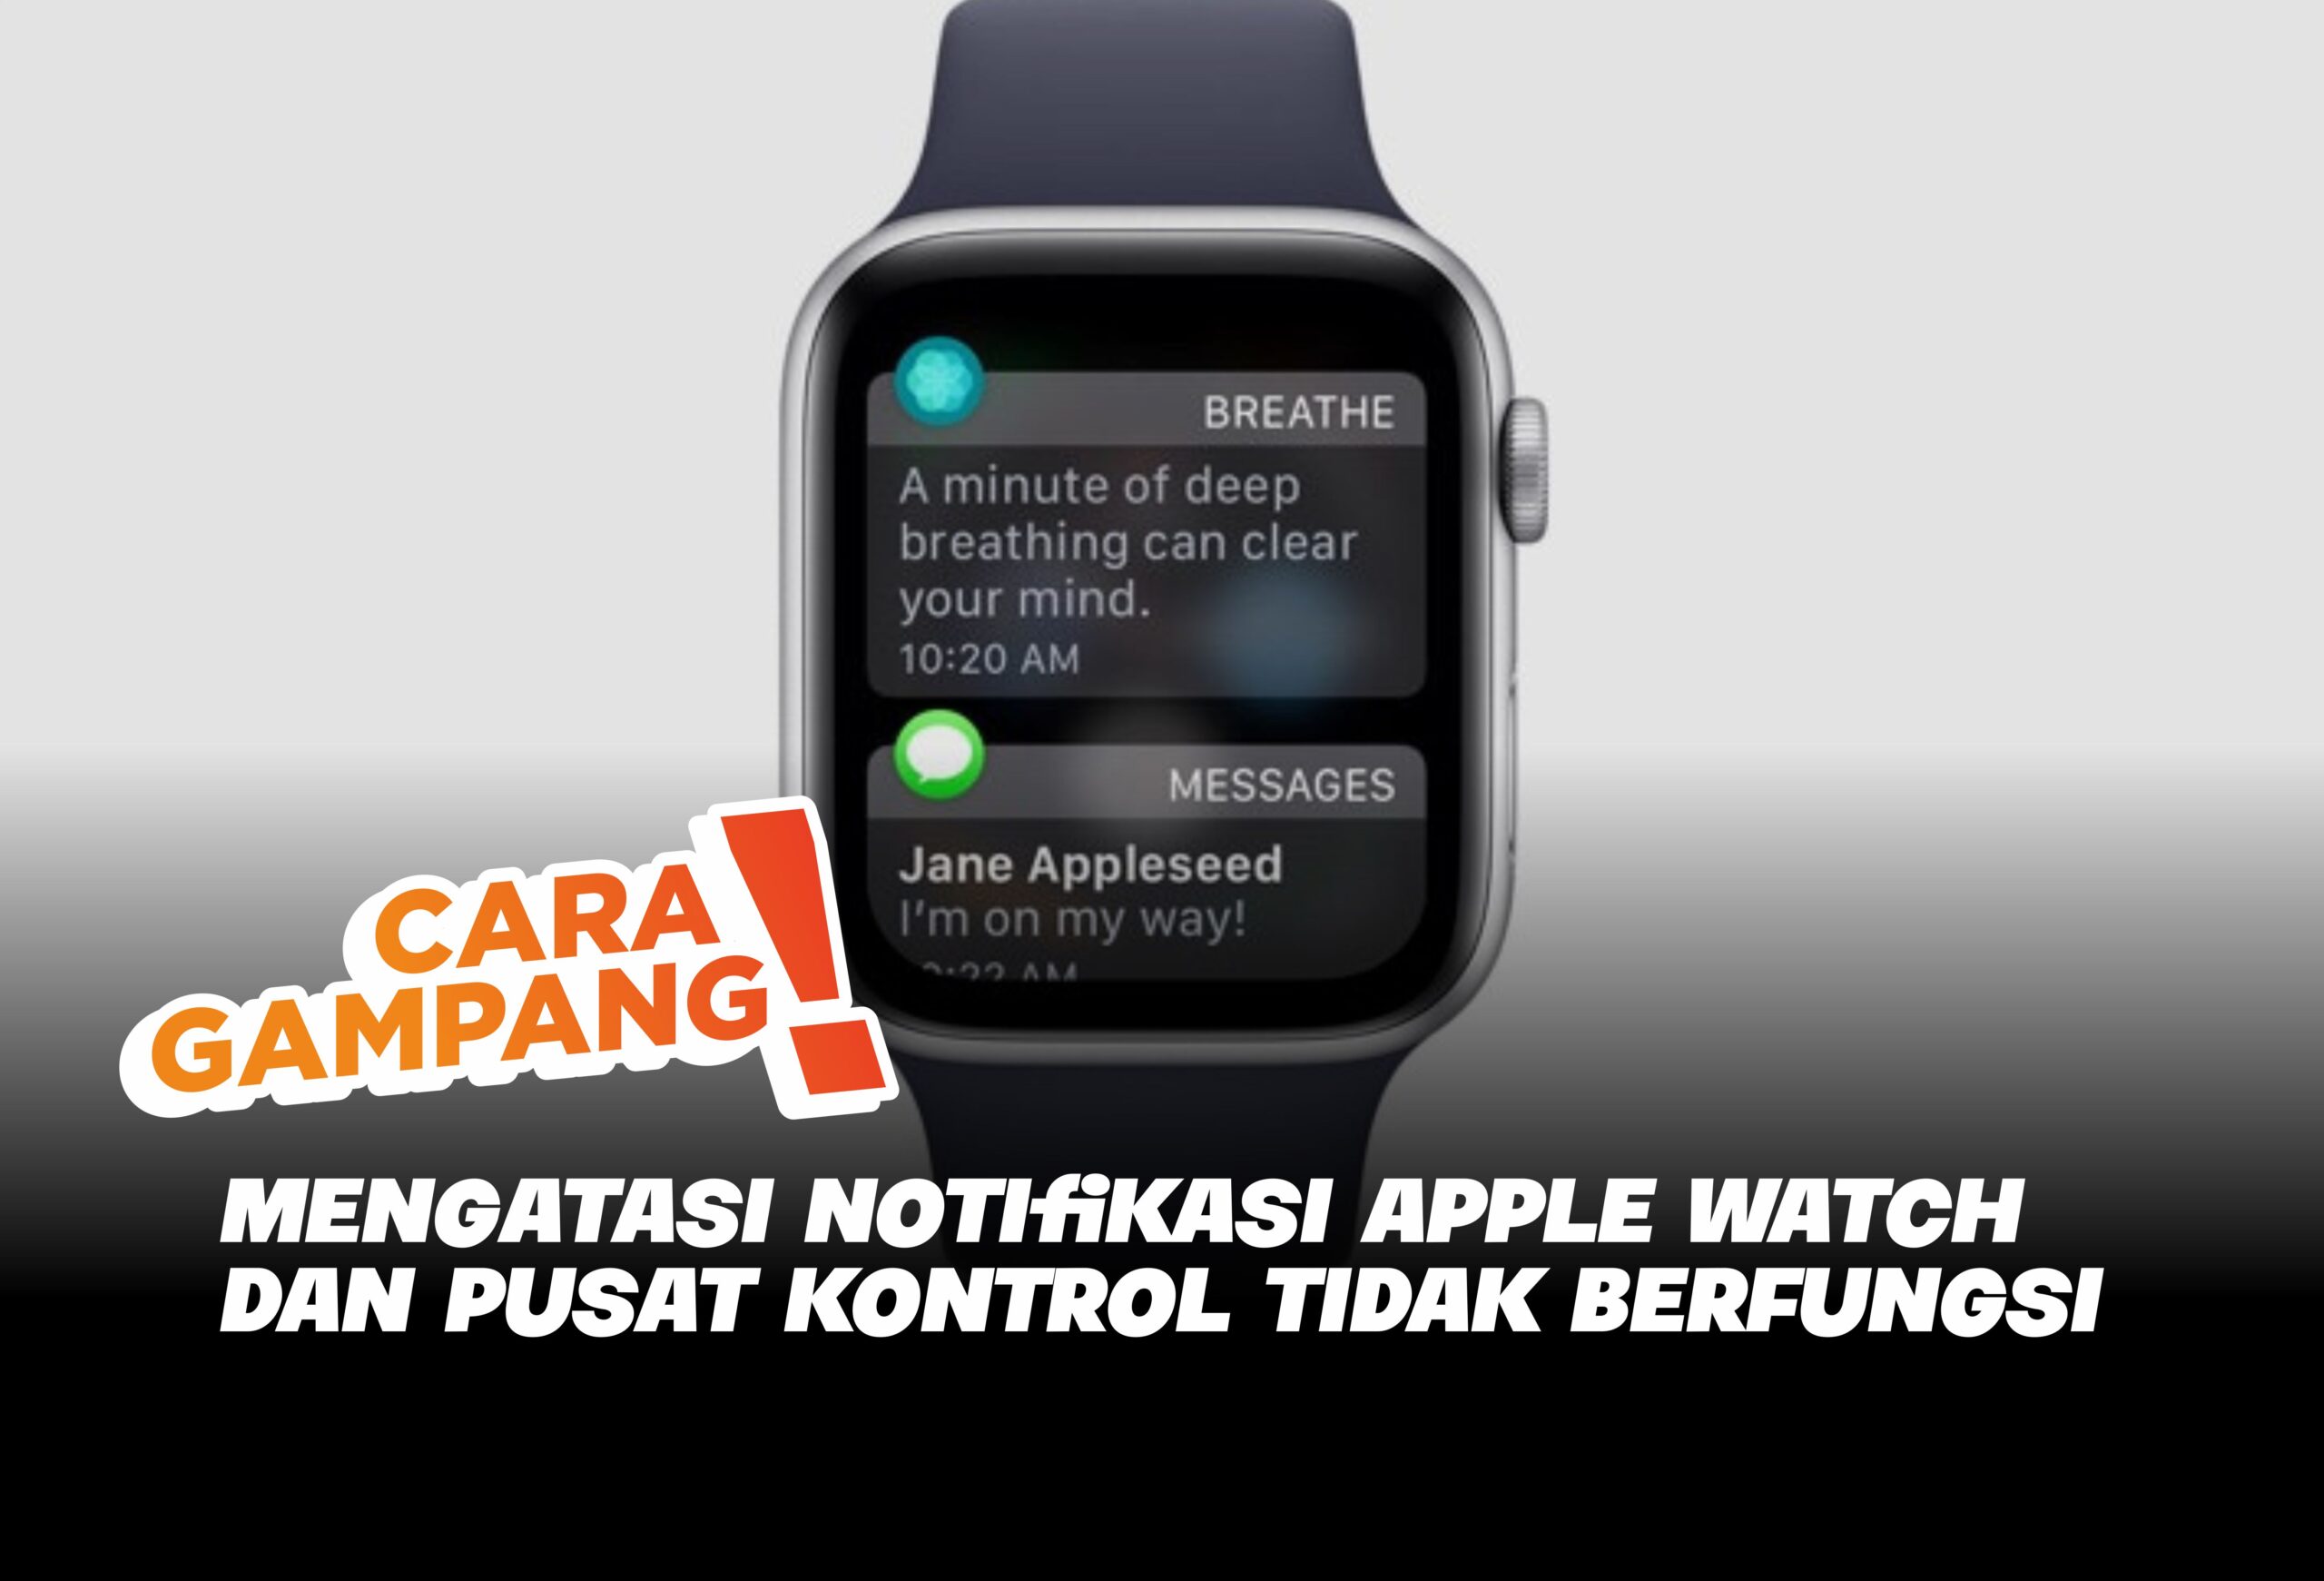 Cara Mengatasi Notifikasi Apple Watch dan Pusat Kontrol Tidak Berfungsi !